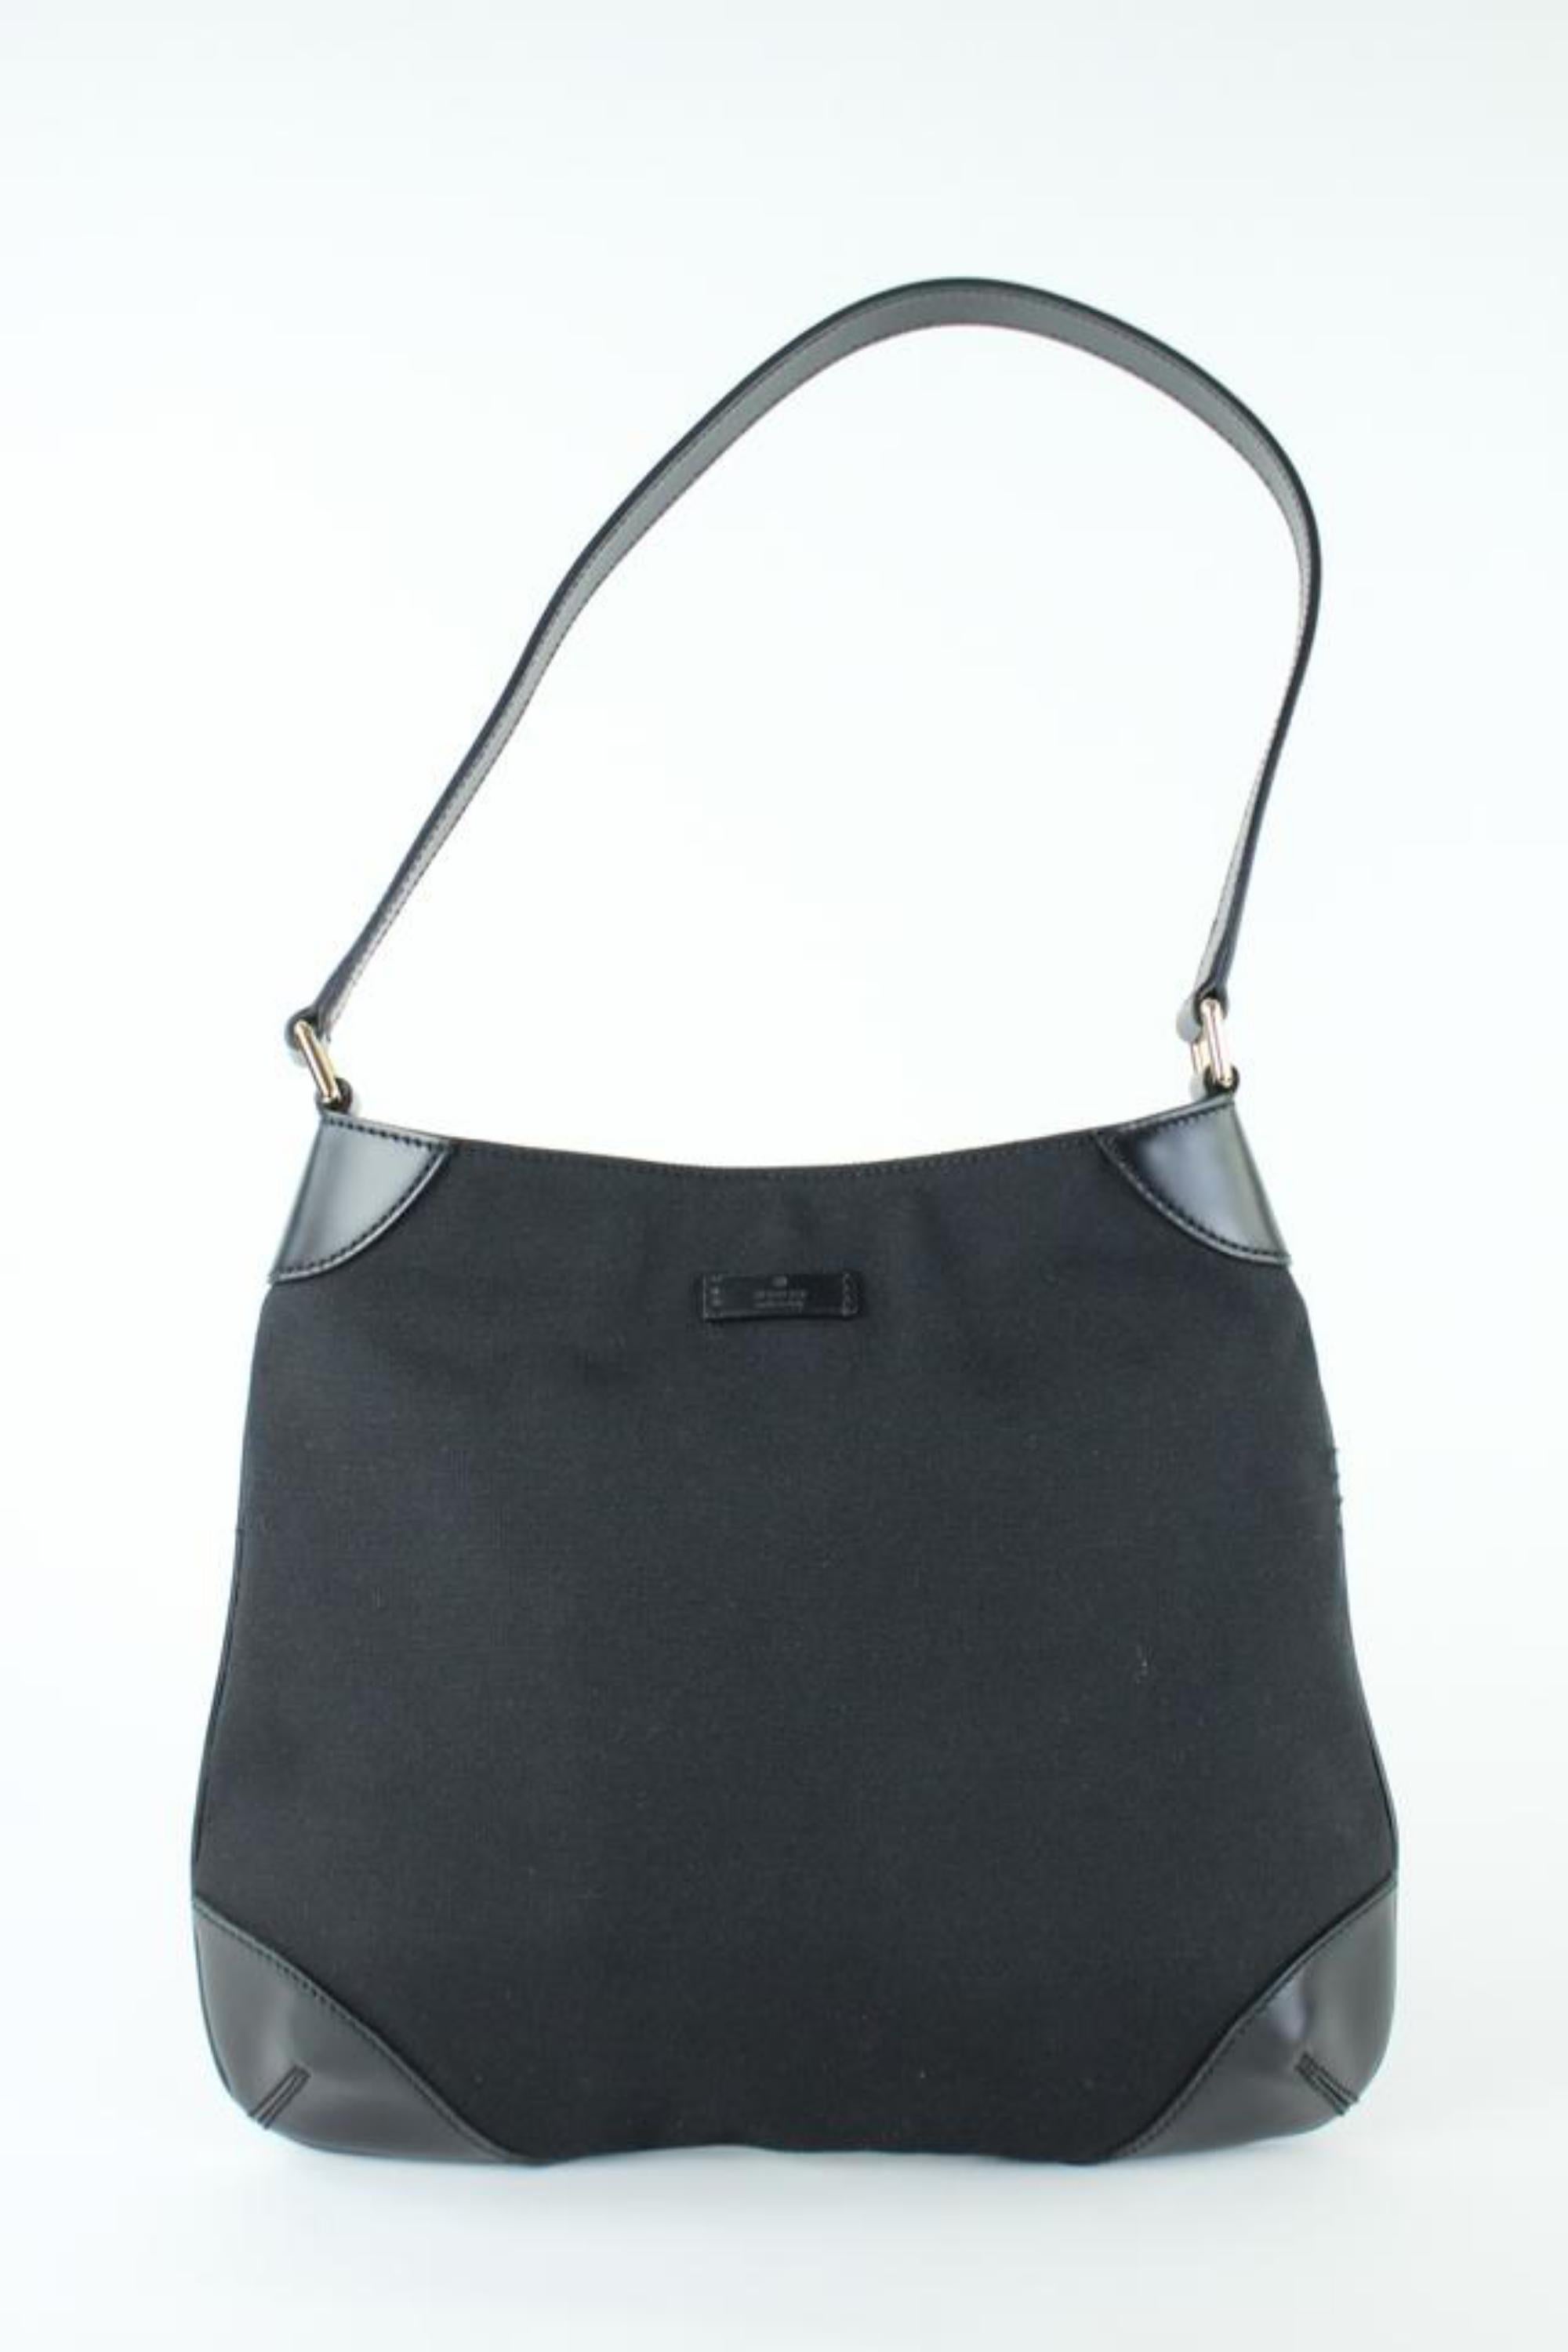 Gucci Leather Trim Medium 817gt2 Black Canvas Hobo Bag For Sale 8